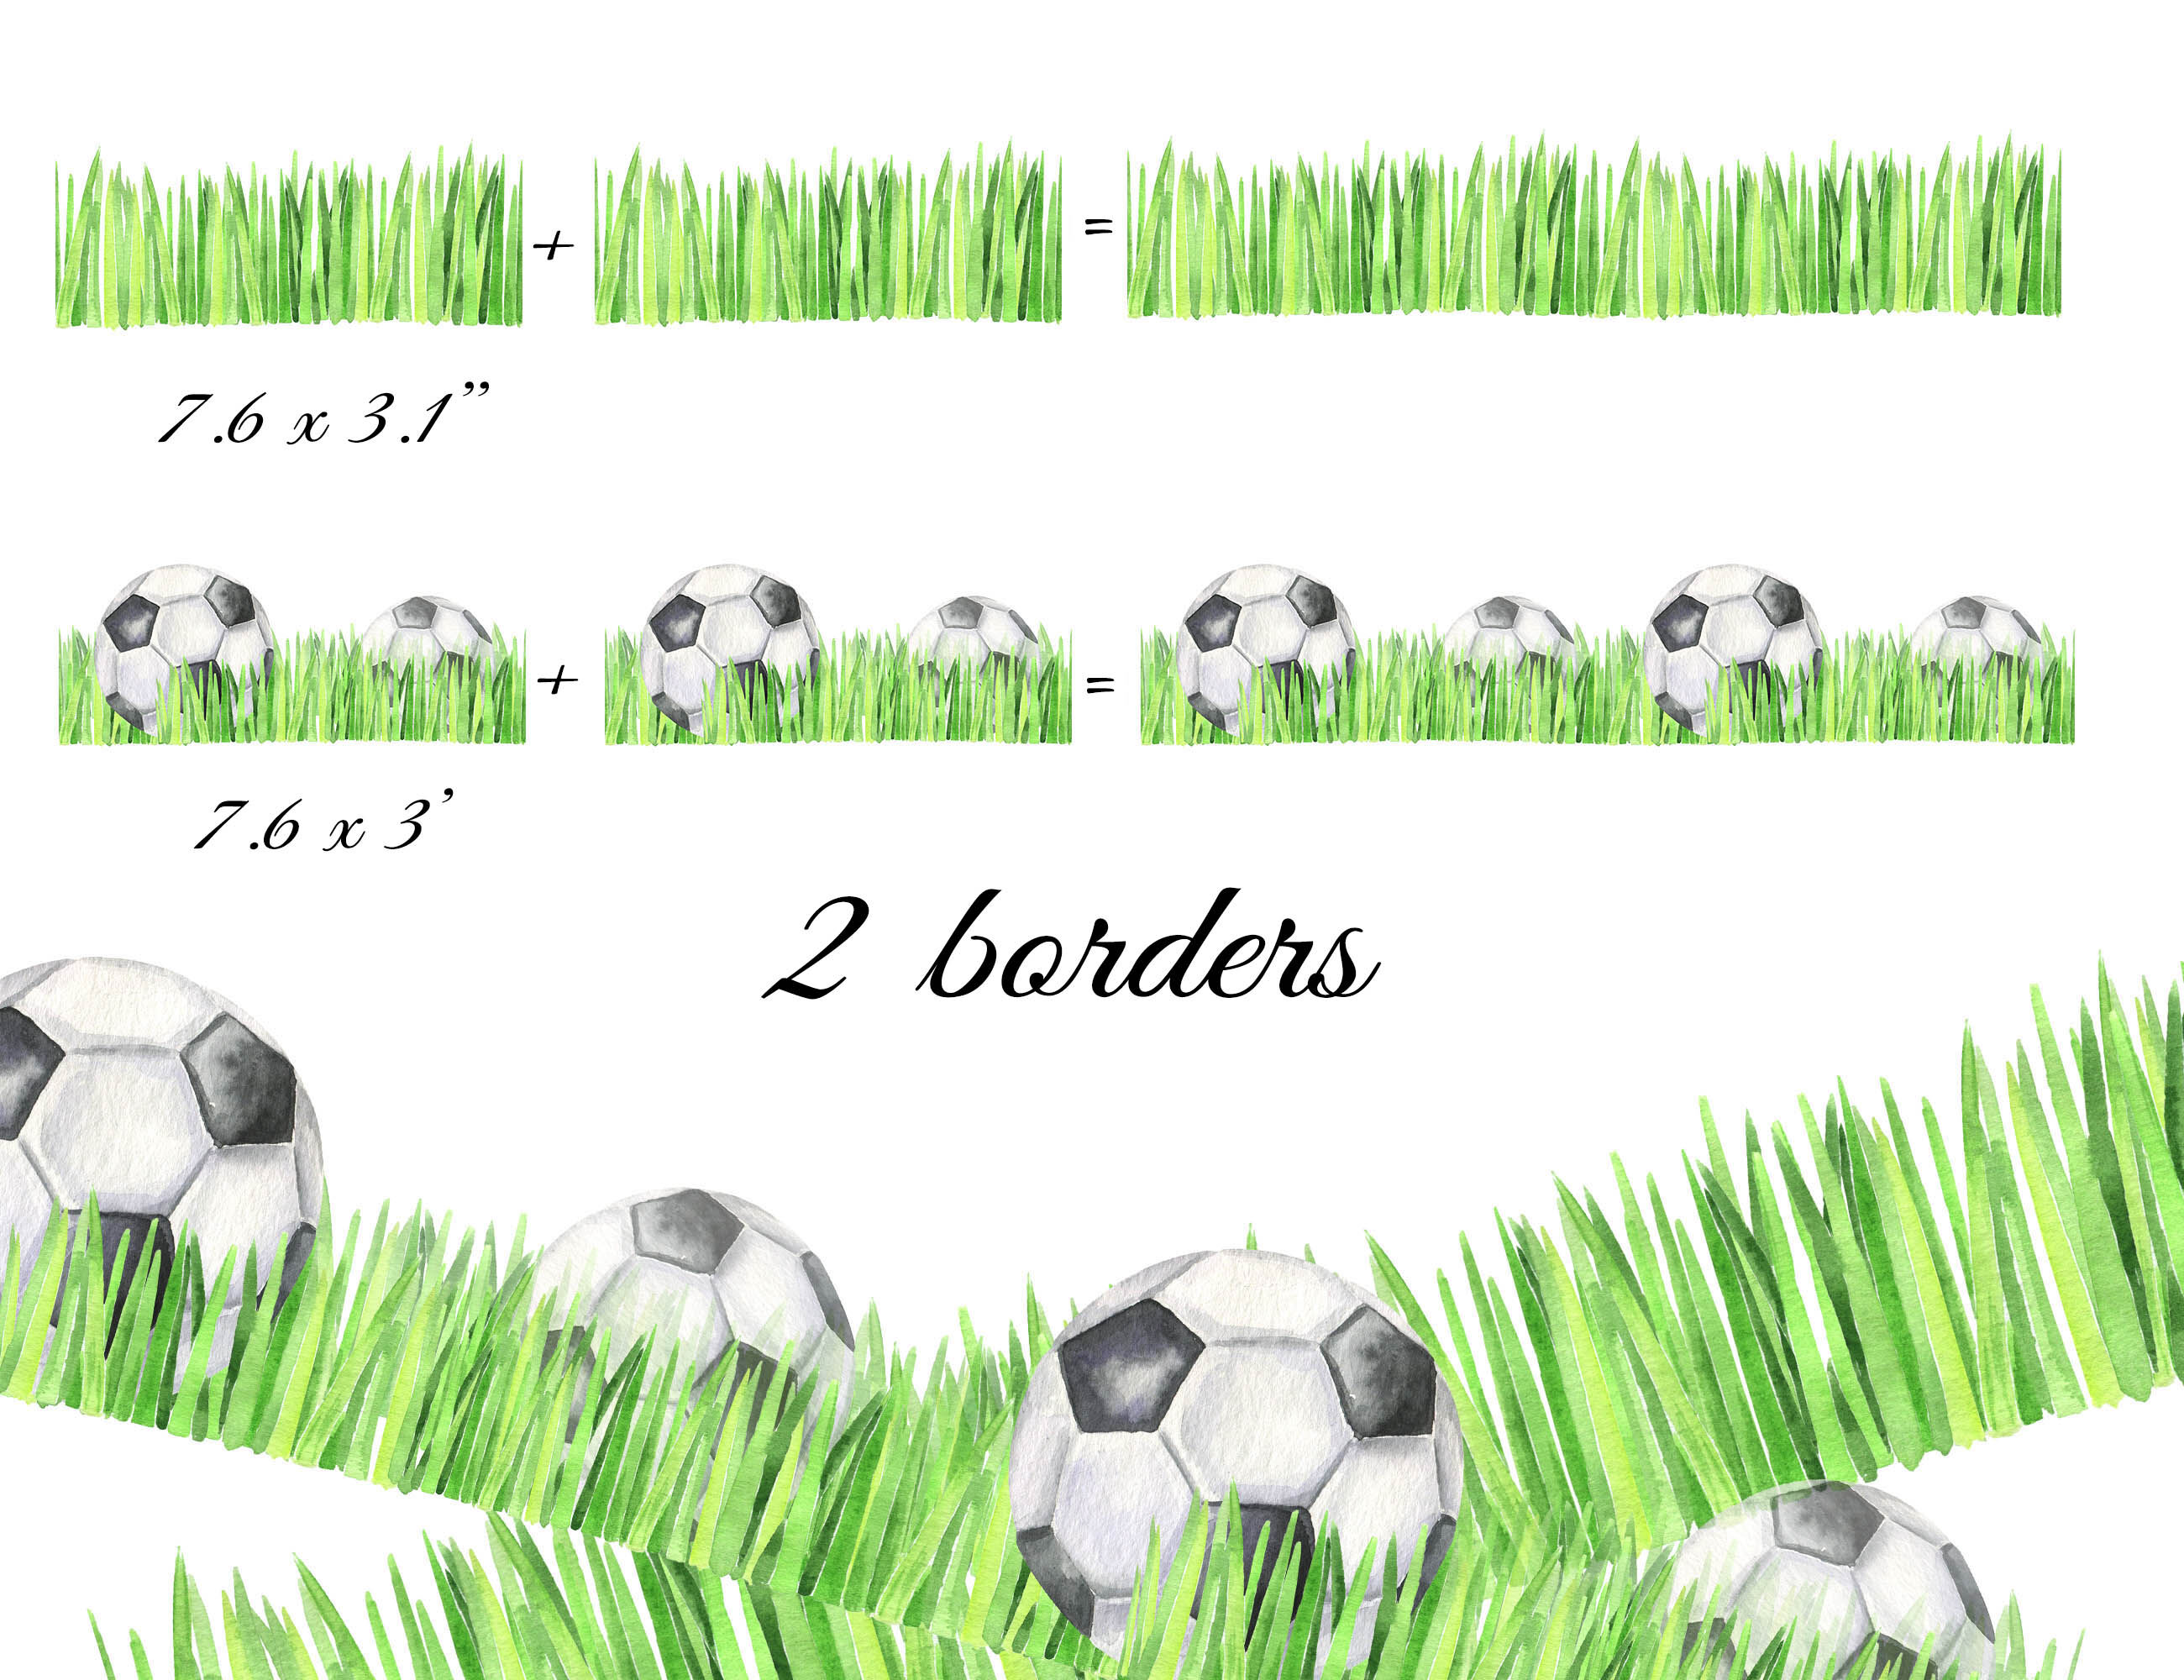 soccer ball border clip art